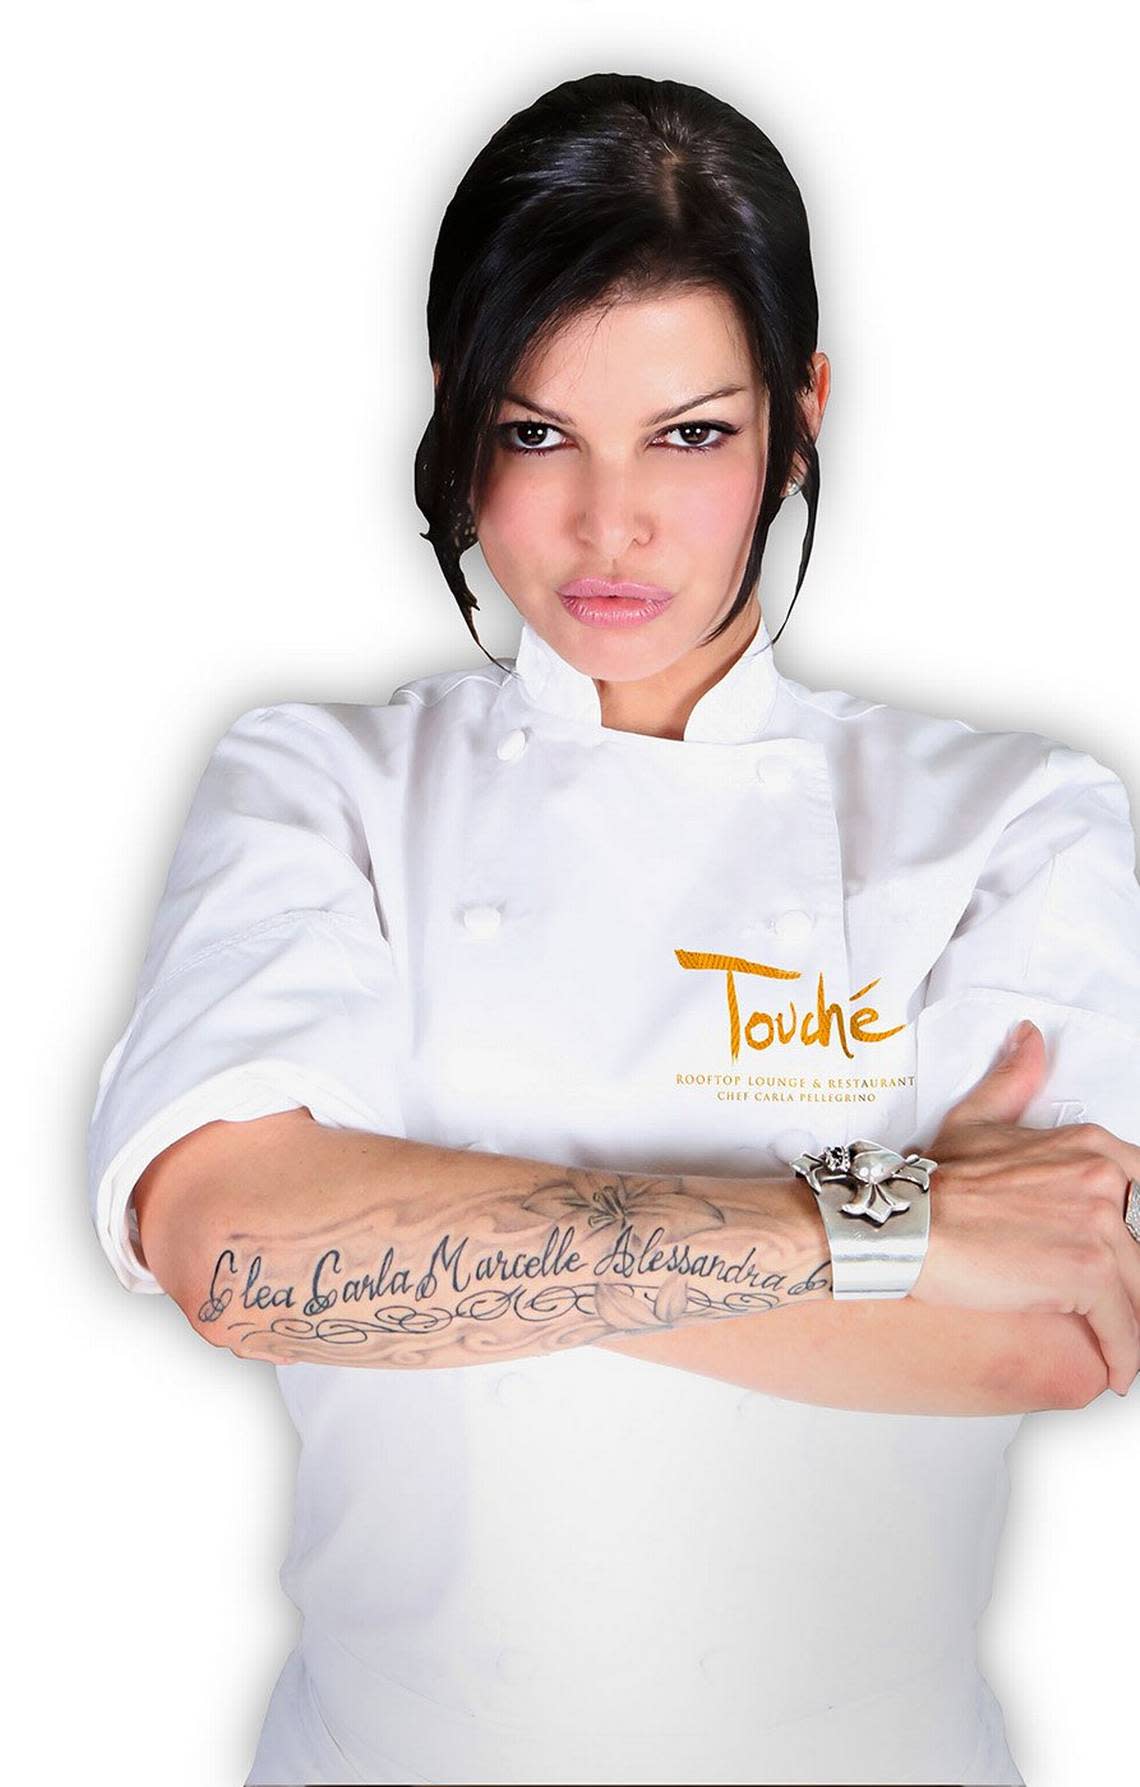 Chef Carla Pellegrino in her days at Touché Restaurant & Lounge in Miami.